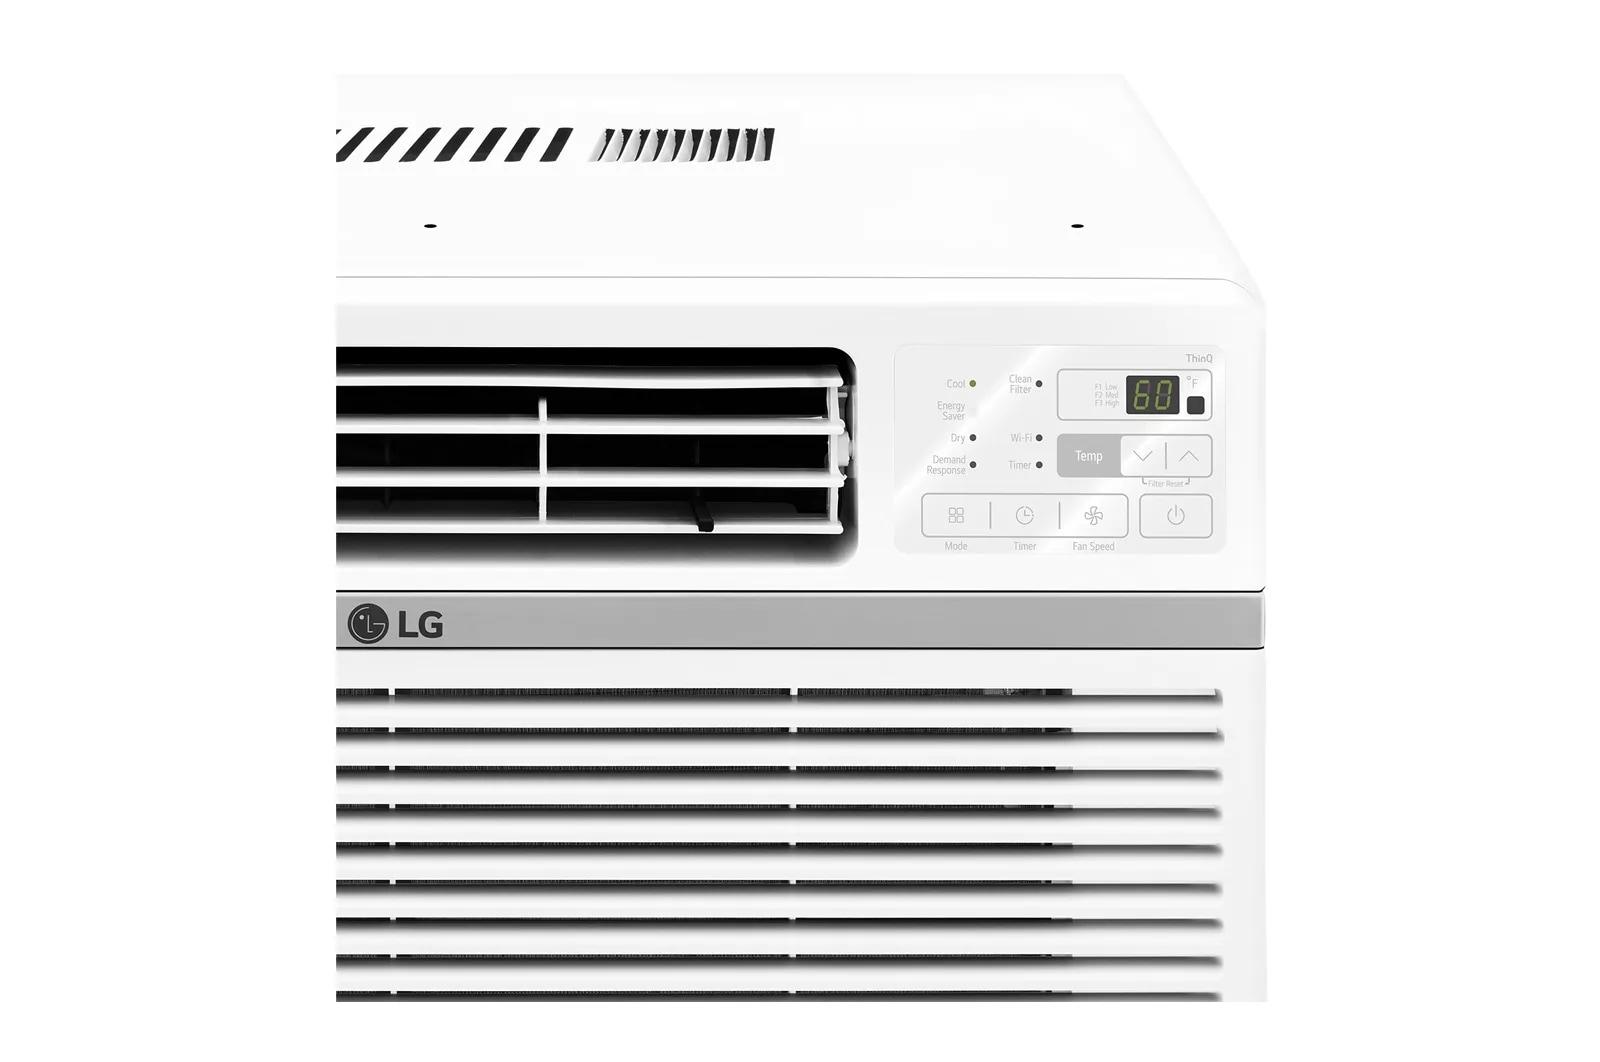 Lg 17,500/18,000 BTU Window Air Conditioner